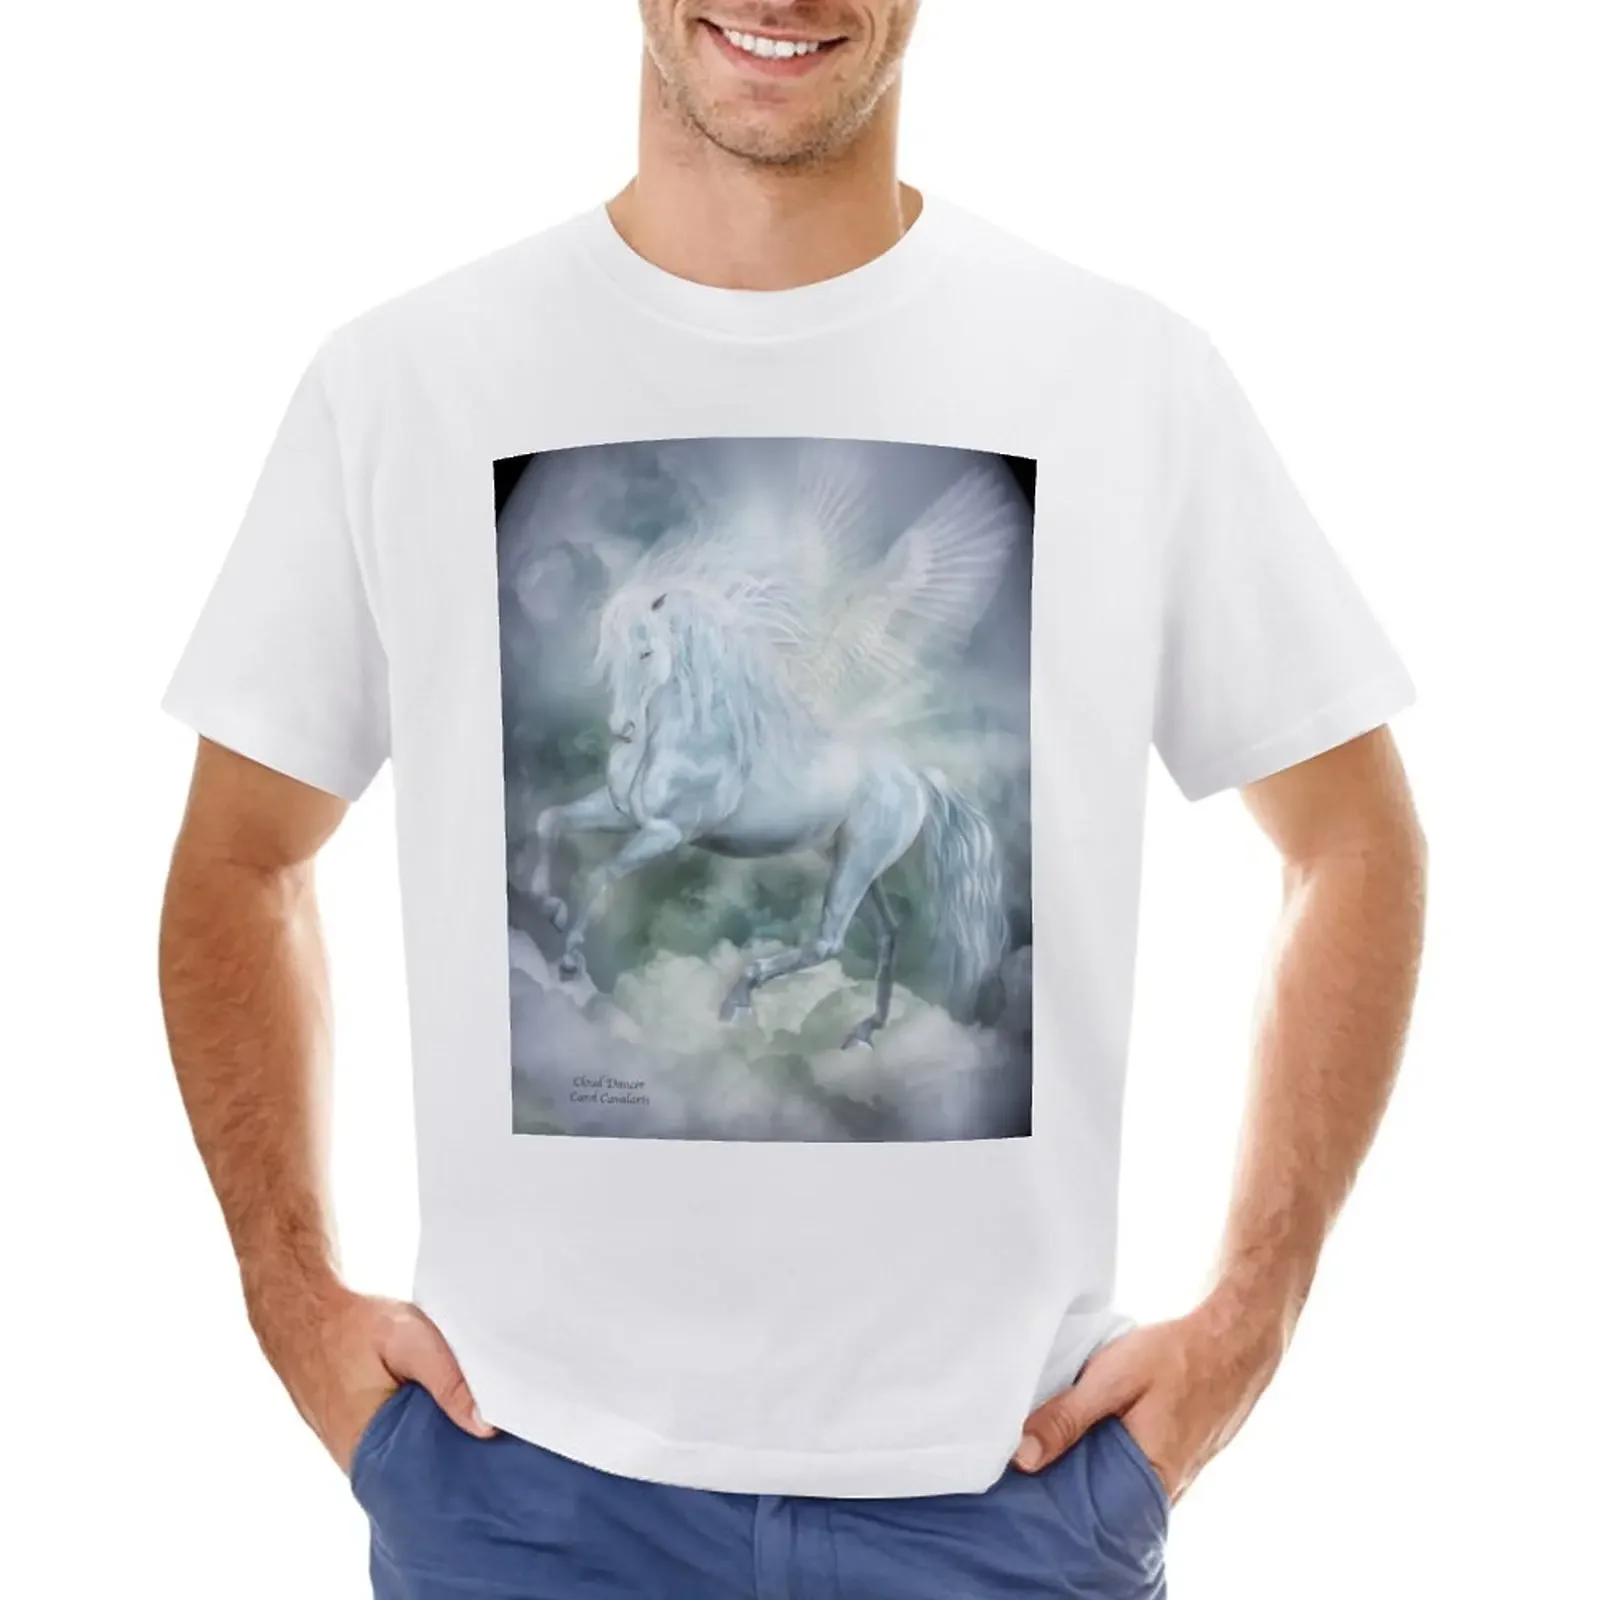 

Cloud Dancer T-Shirt oversizeds customs animal prinfor boys mens clothing